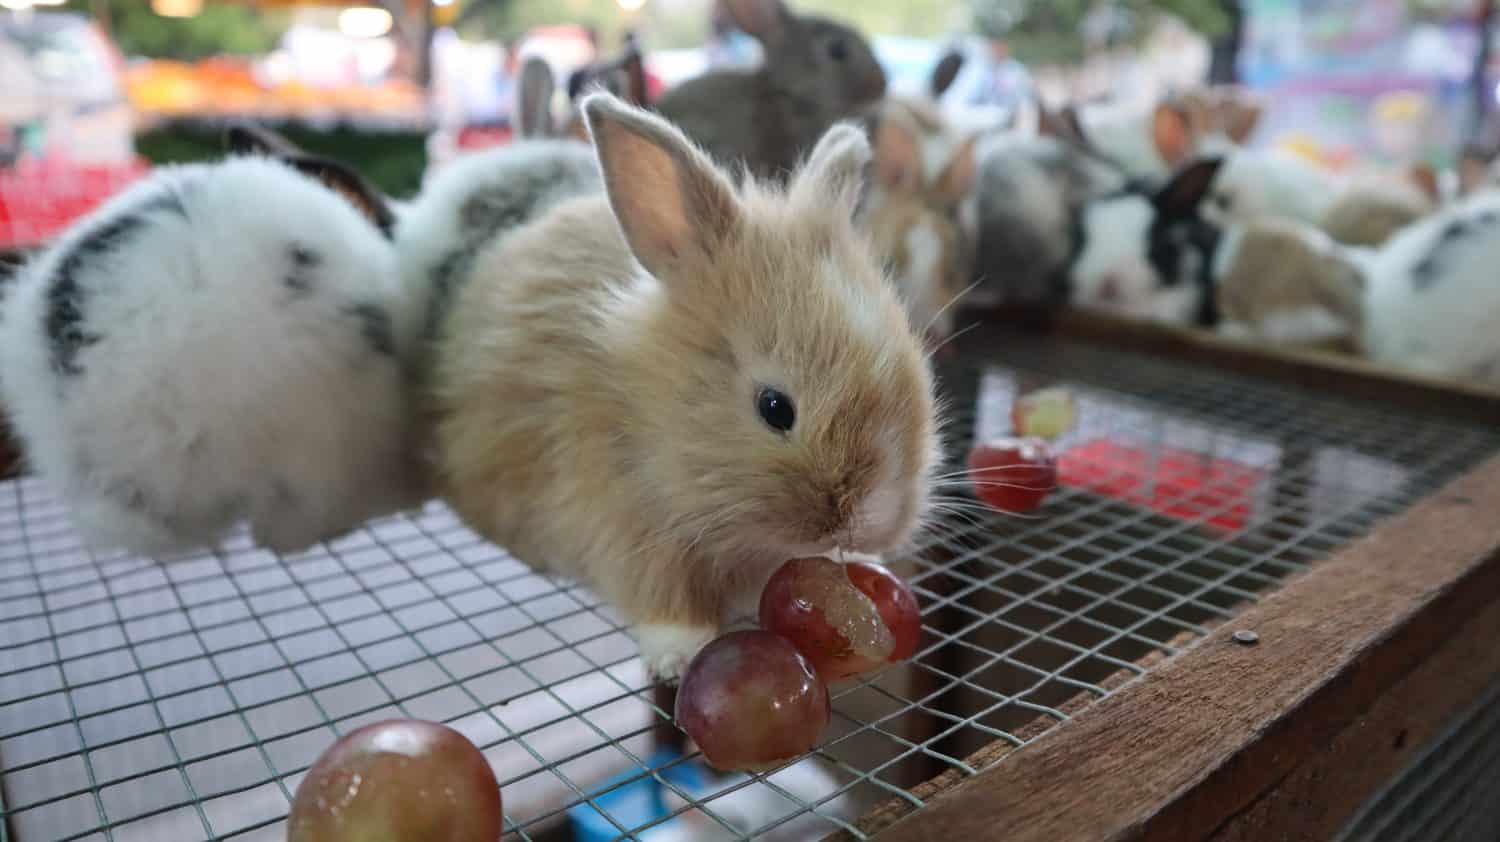 Cute little rabbit eating grapes